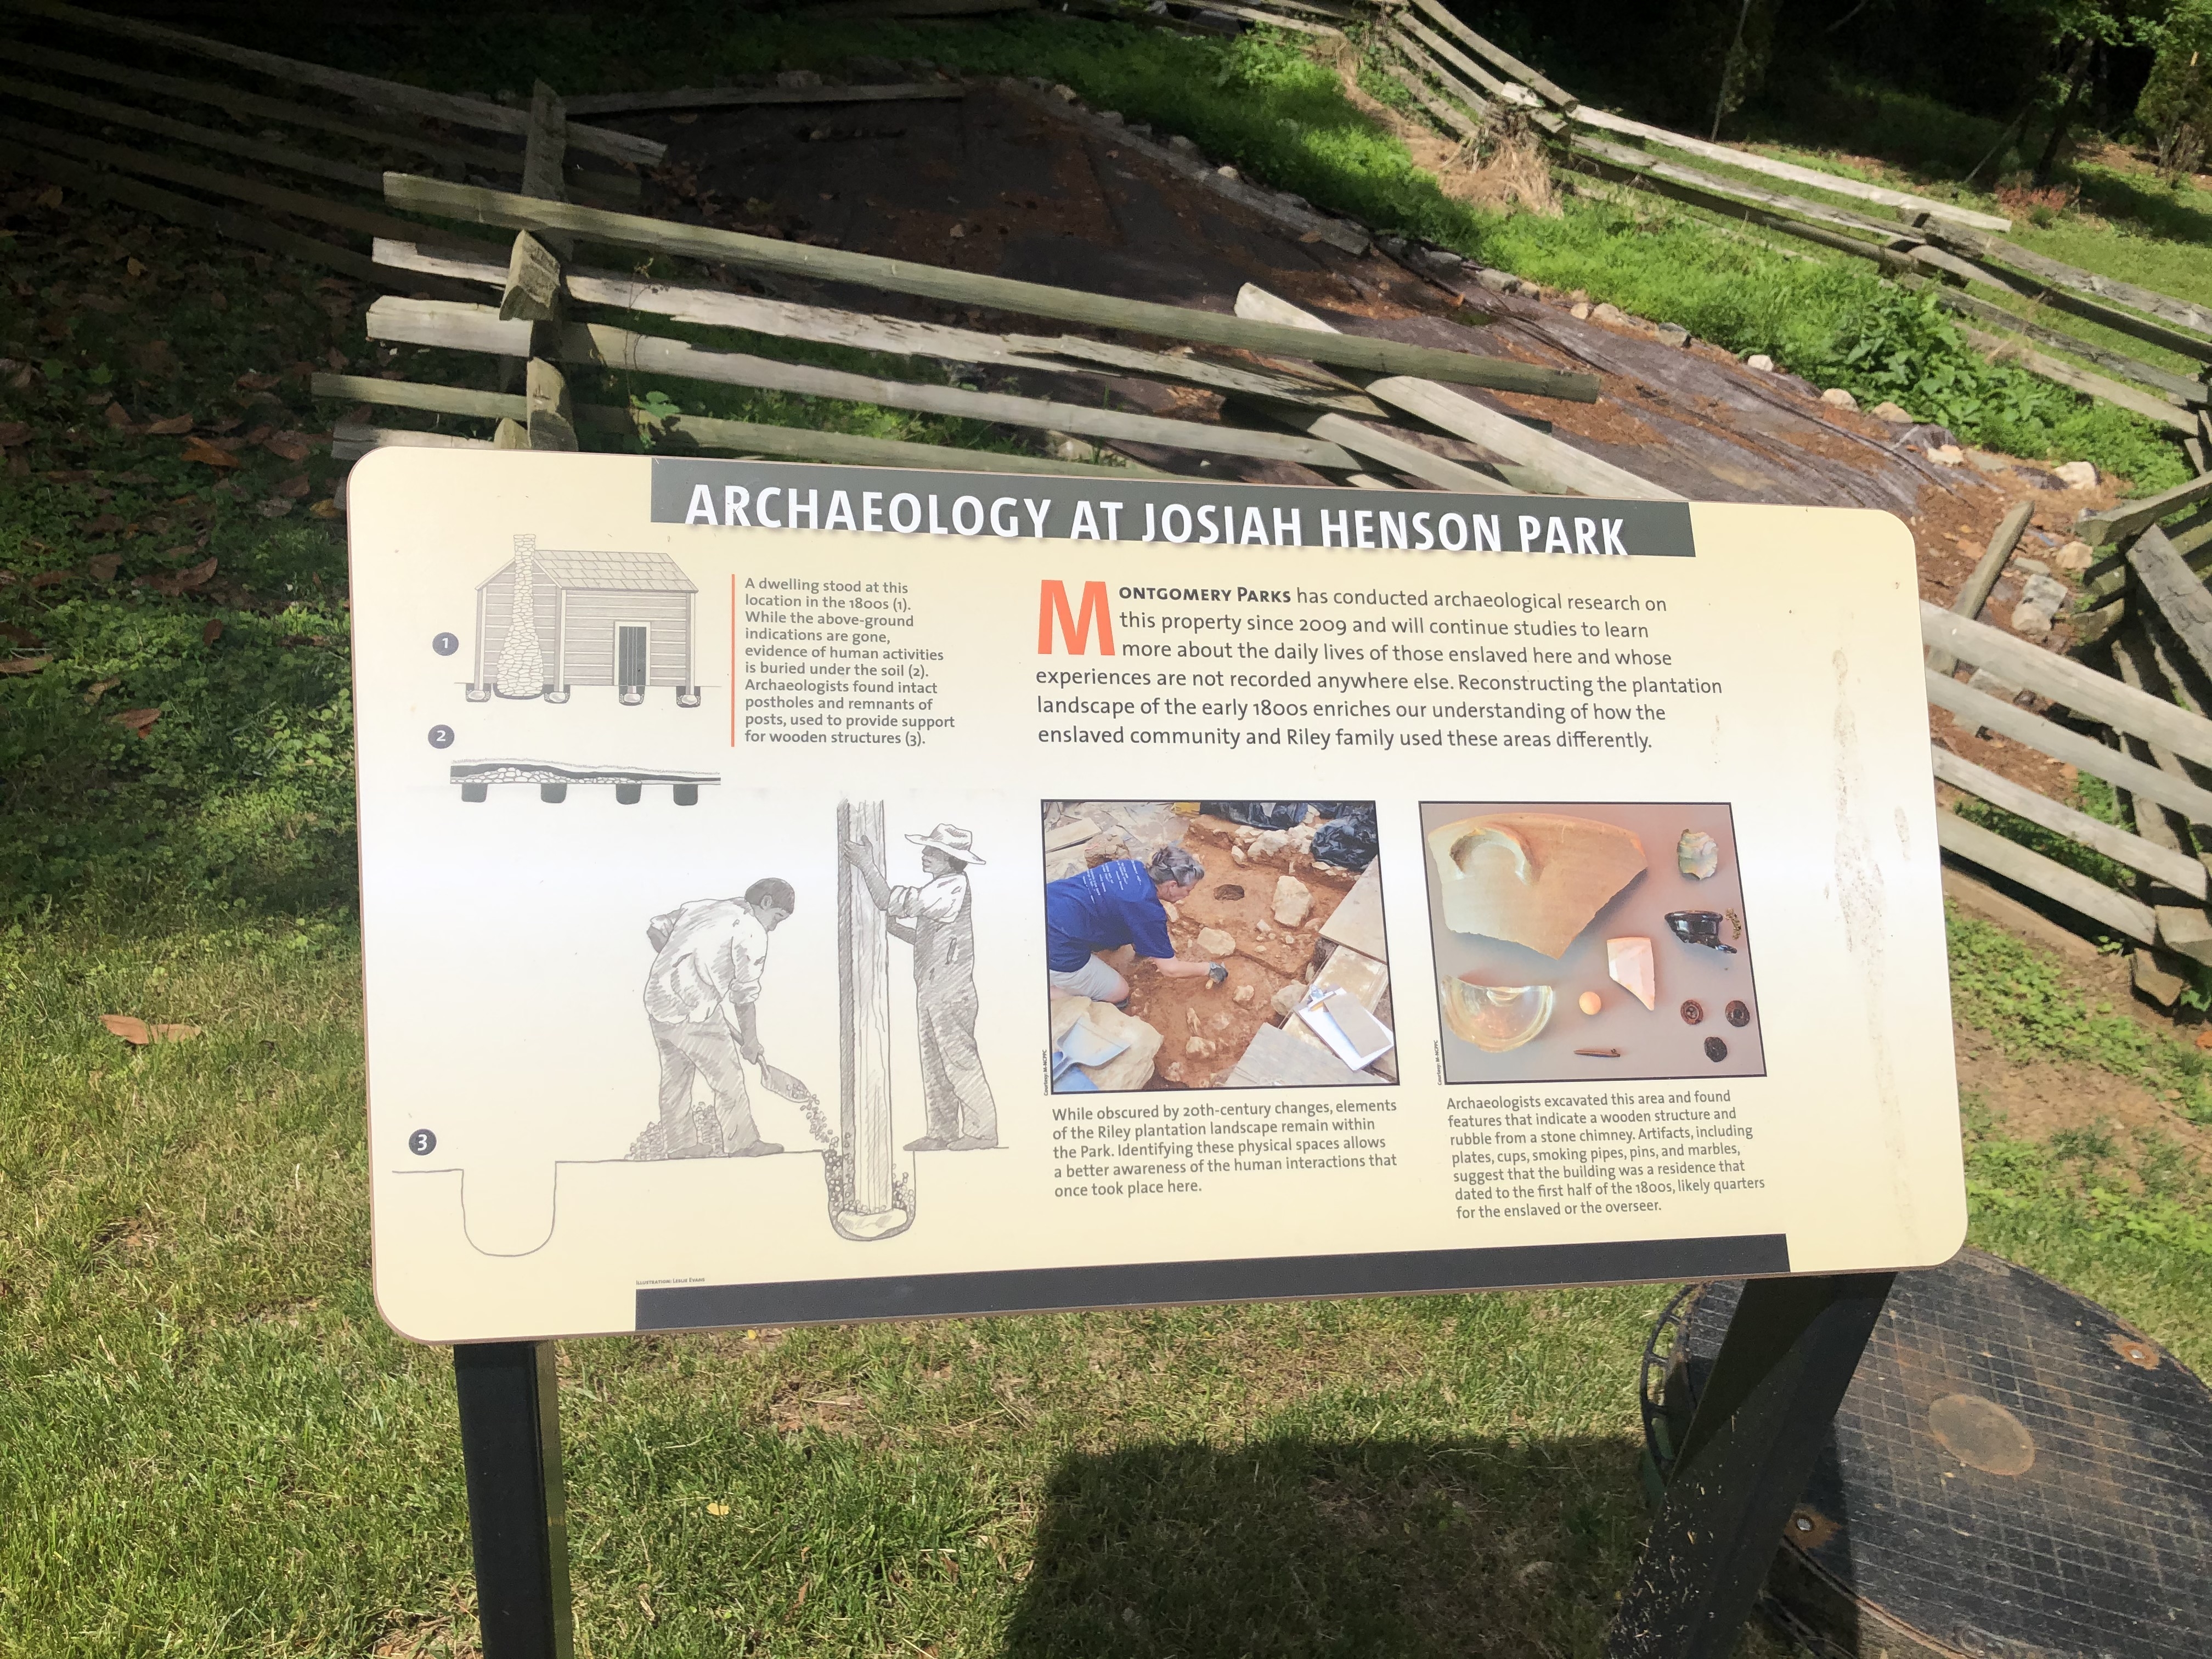 Archaeology at Josiah Henson Park Marker